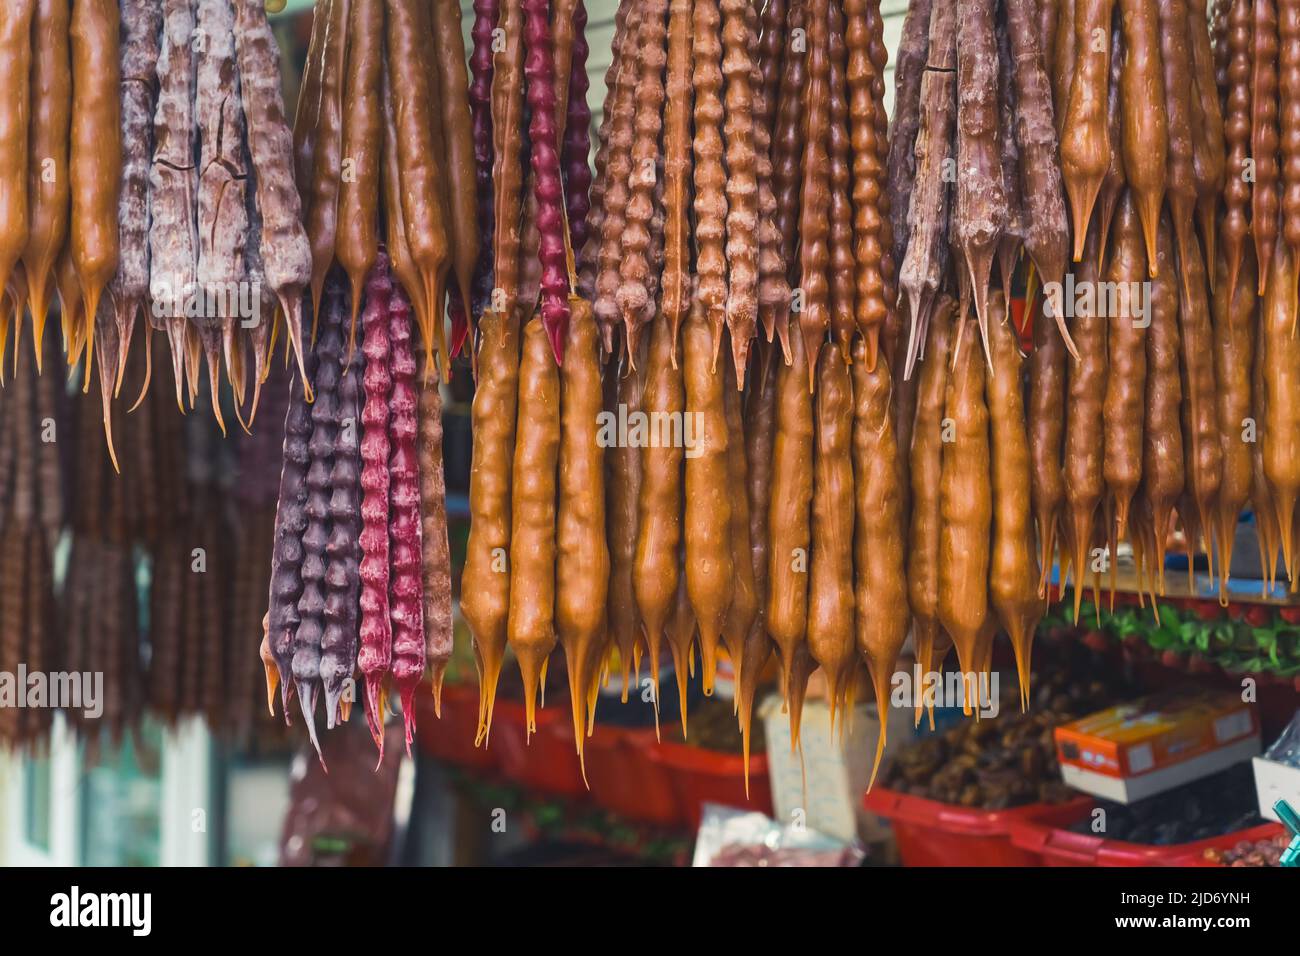 closeup view of Georgian traditional snack Churchkhela in the local market, Tbilisi, Georgia. High quality photo Stock Photo